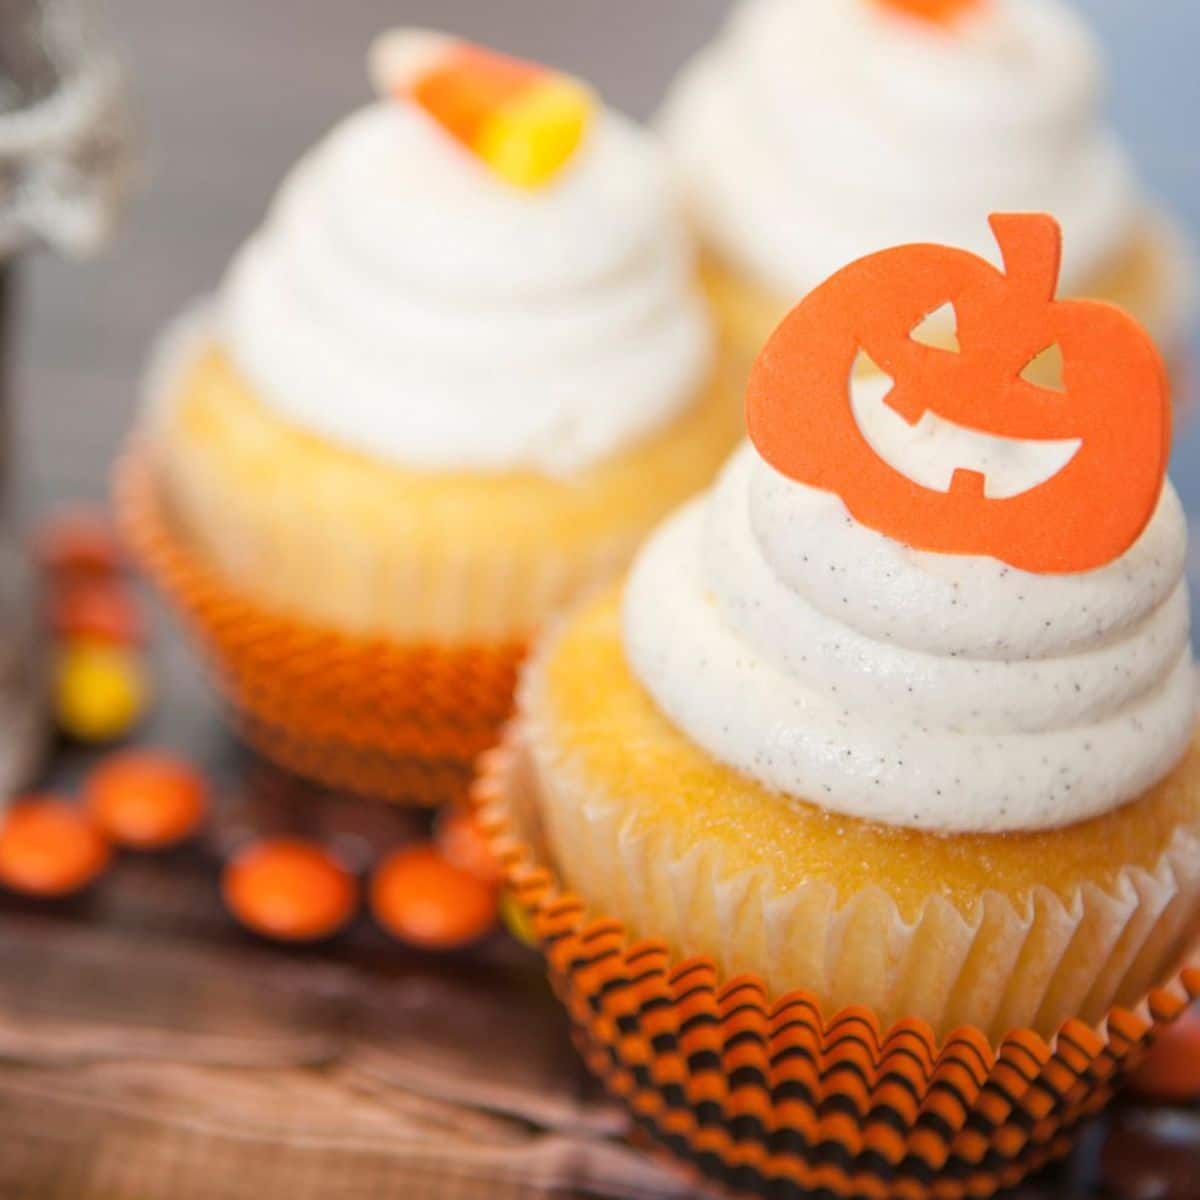 Die besten Halloween-Cupcake-Rezepte zum Backen wie diese leckeren Vanilleschoten-Cupcakes mit Halloween-Dekor.